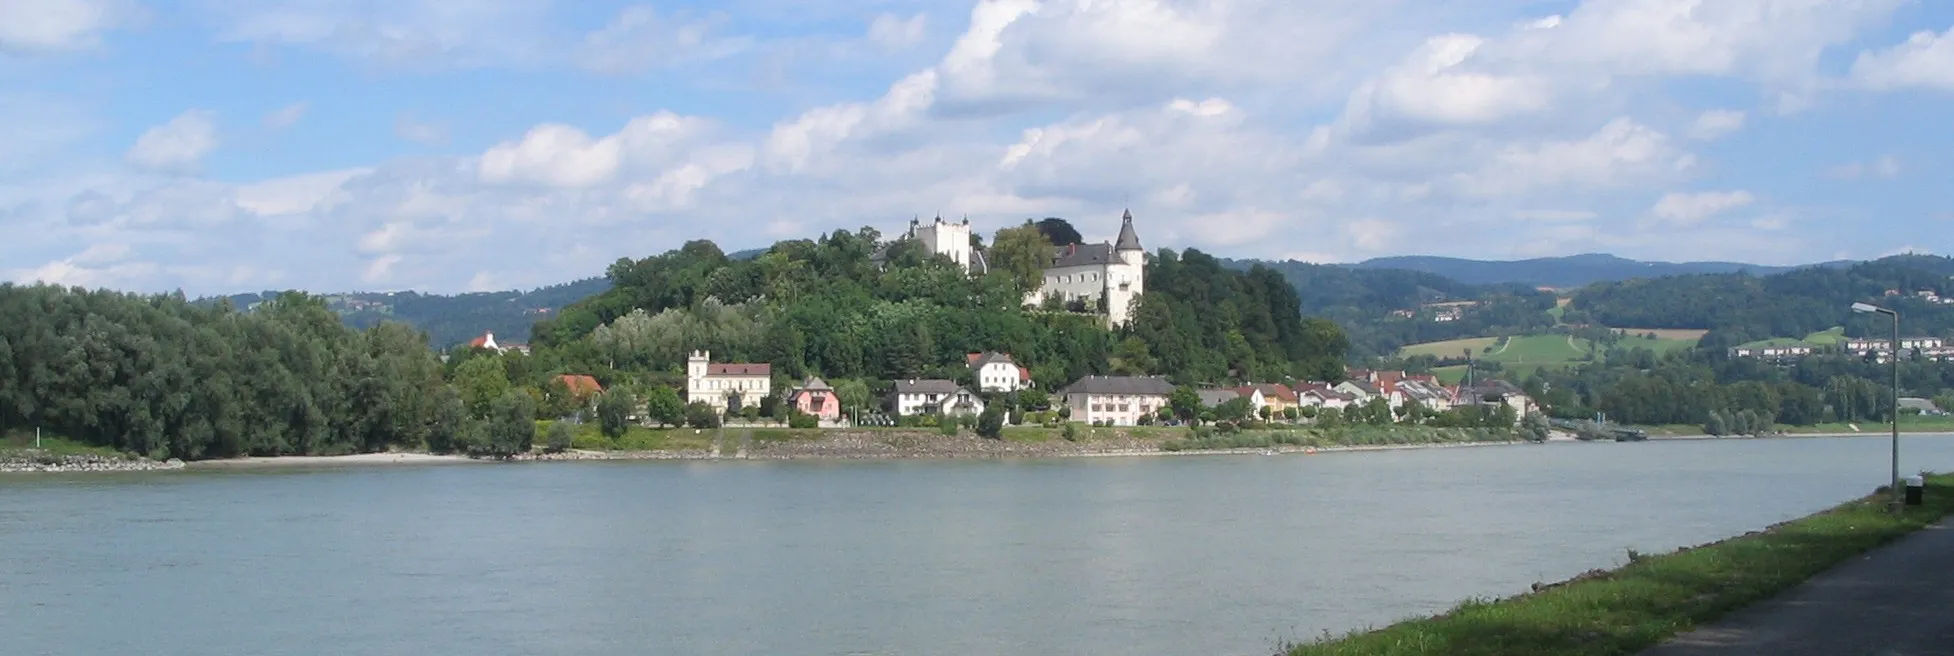 Image of Ottensheim